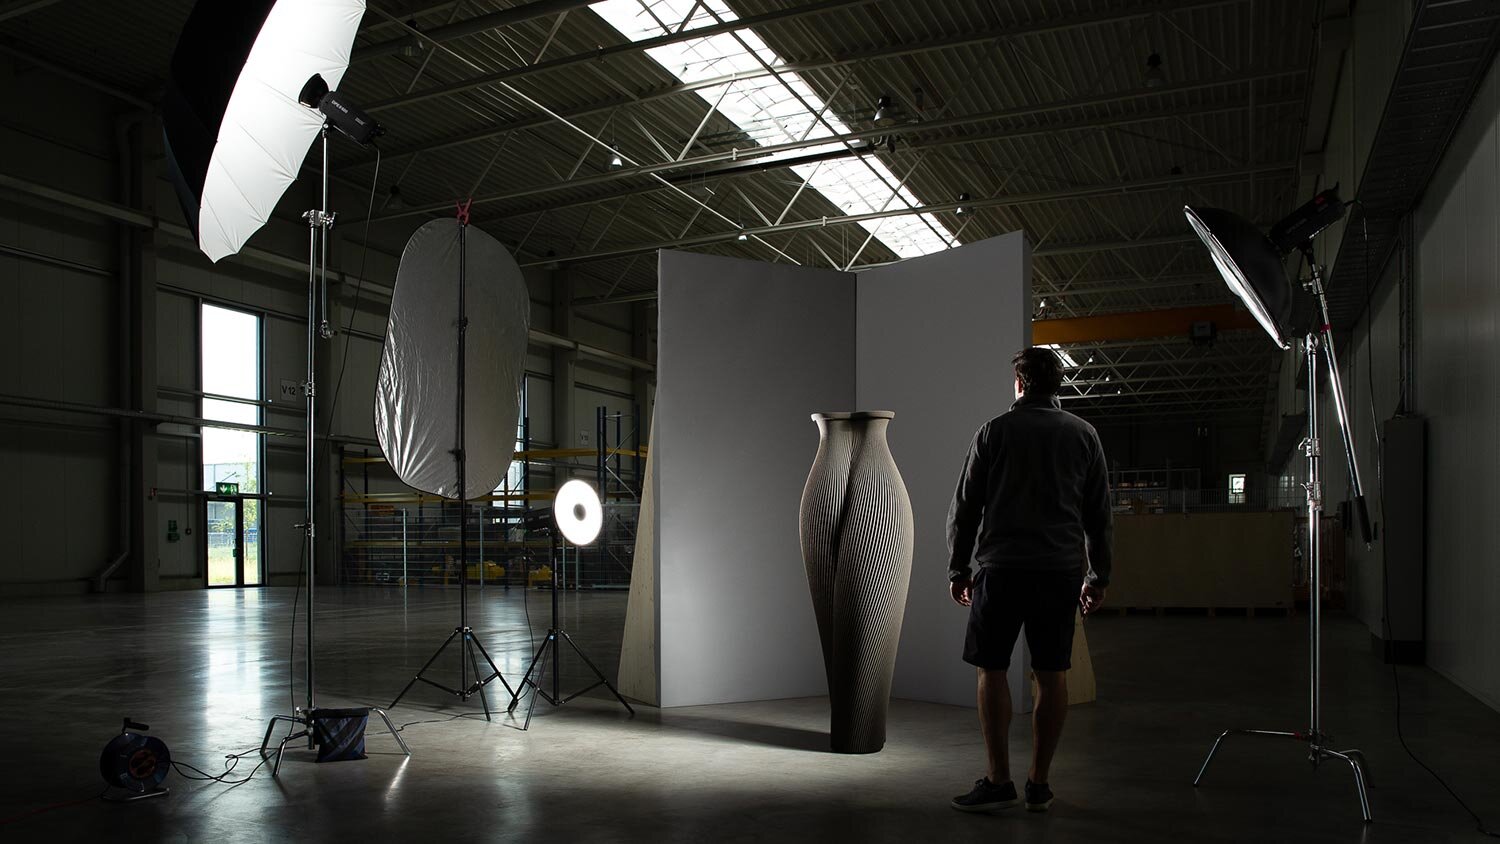 Large 3D digital printed vessel